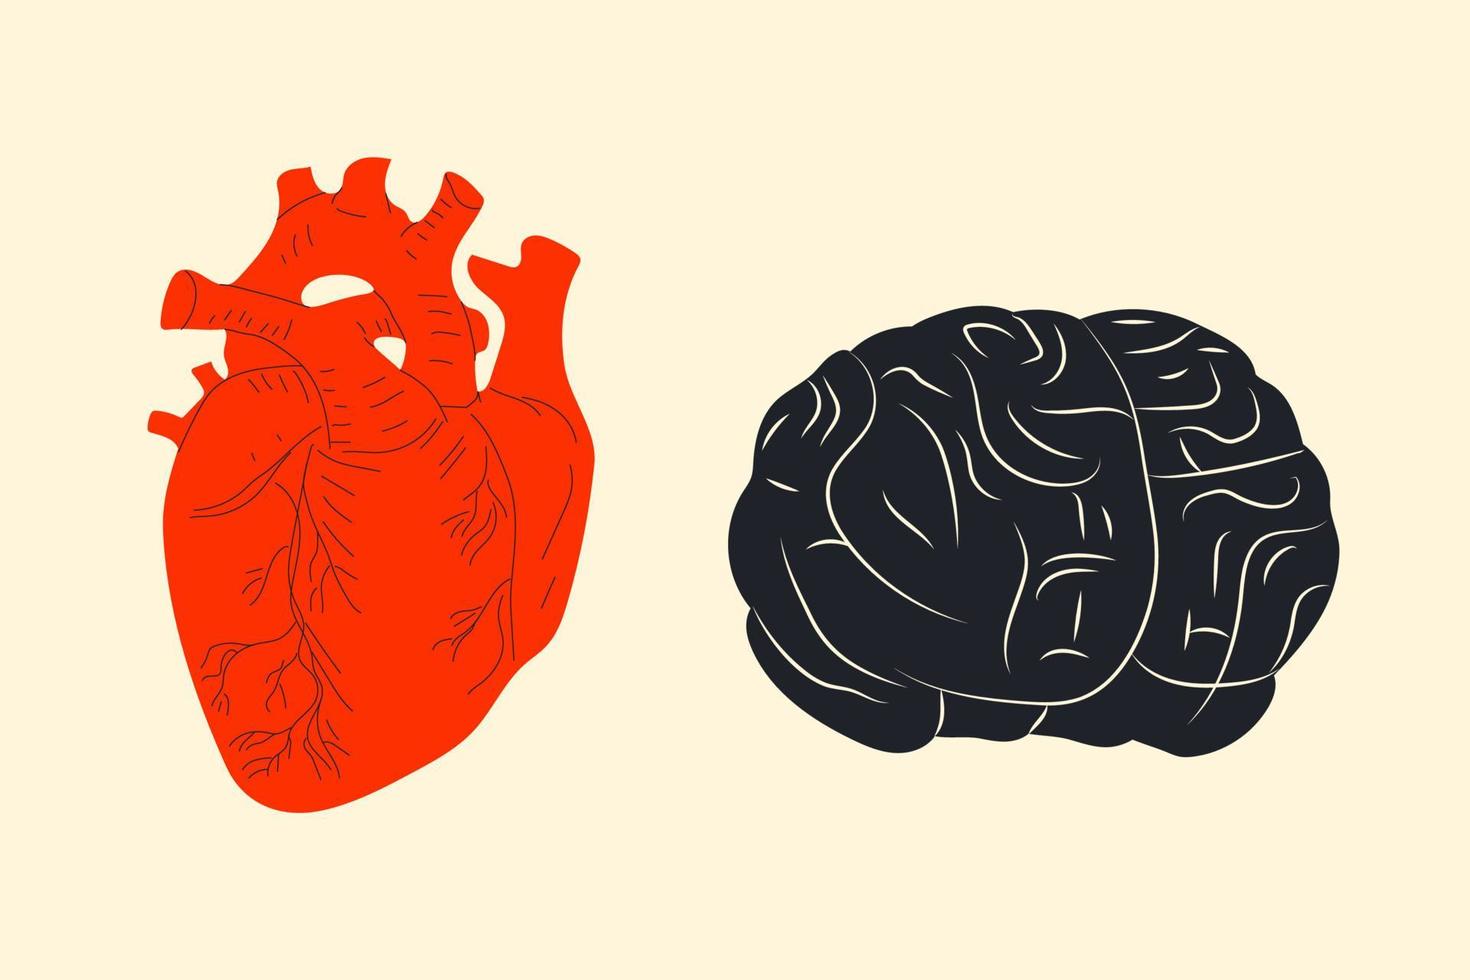 Human heart and brains cartoon character. Vector